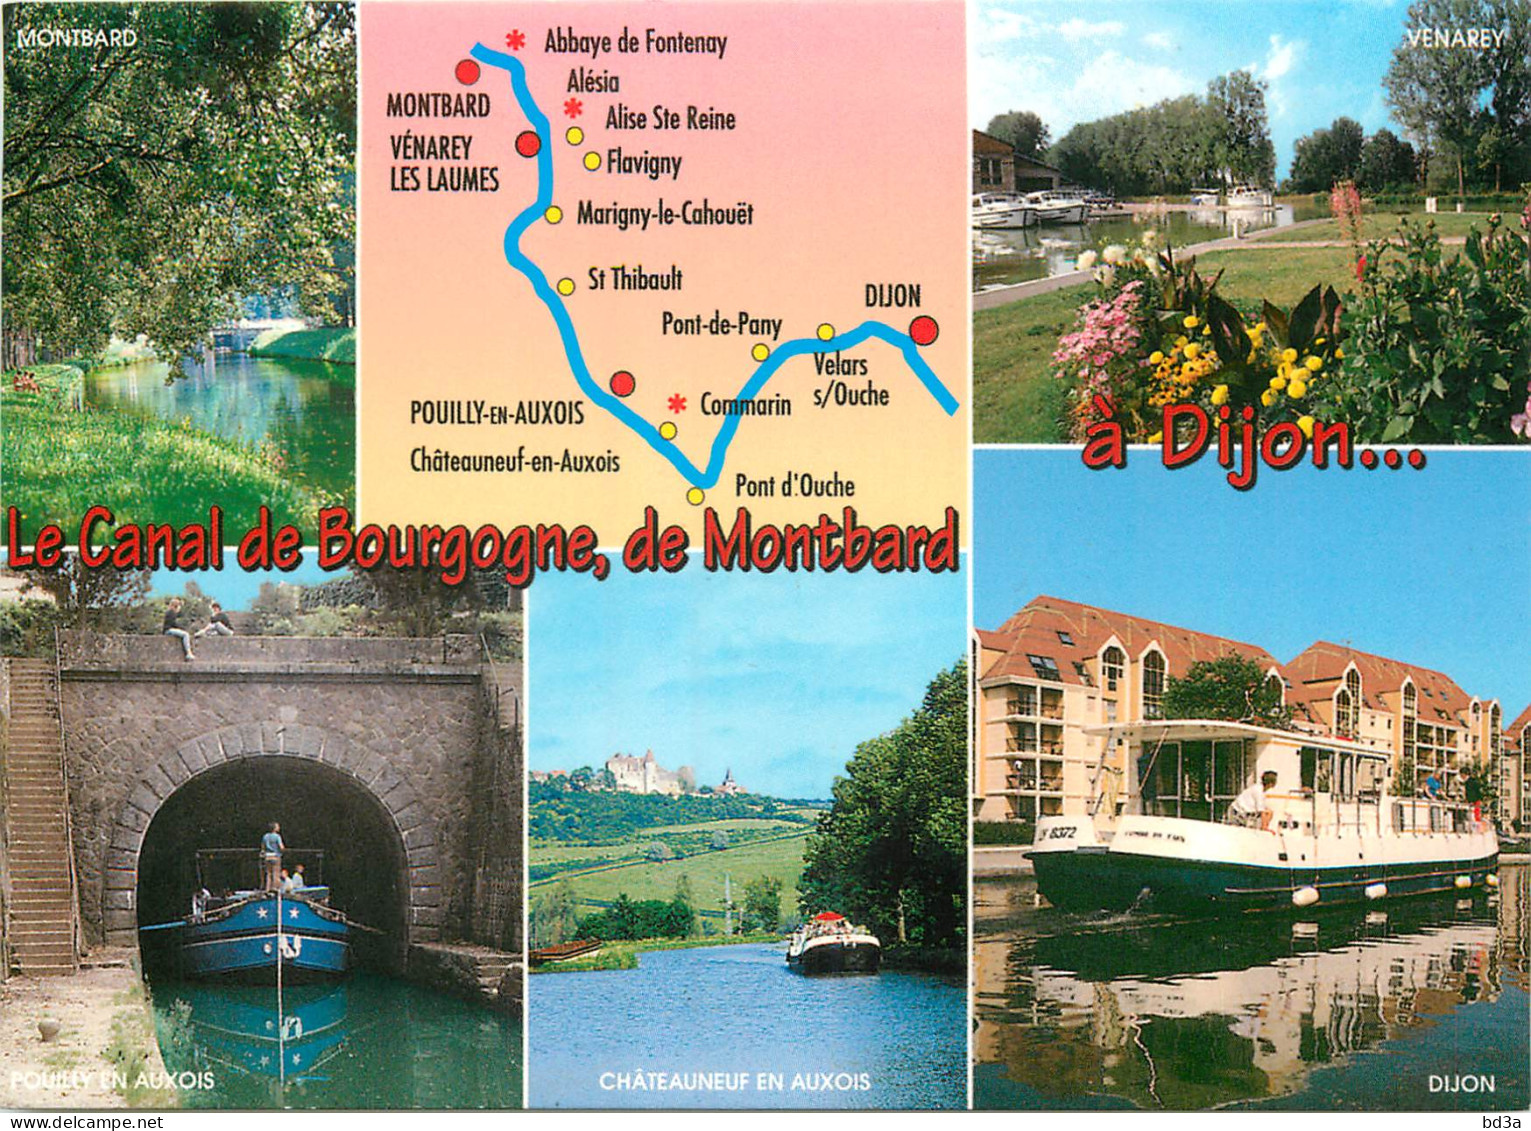  LE  CANAL DE BOURGOGNE DE MONTBARD A DIJON - Bourgogne